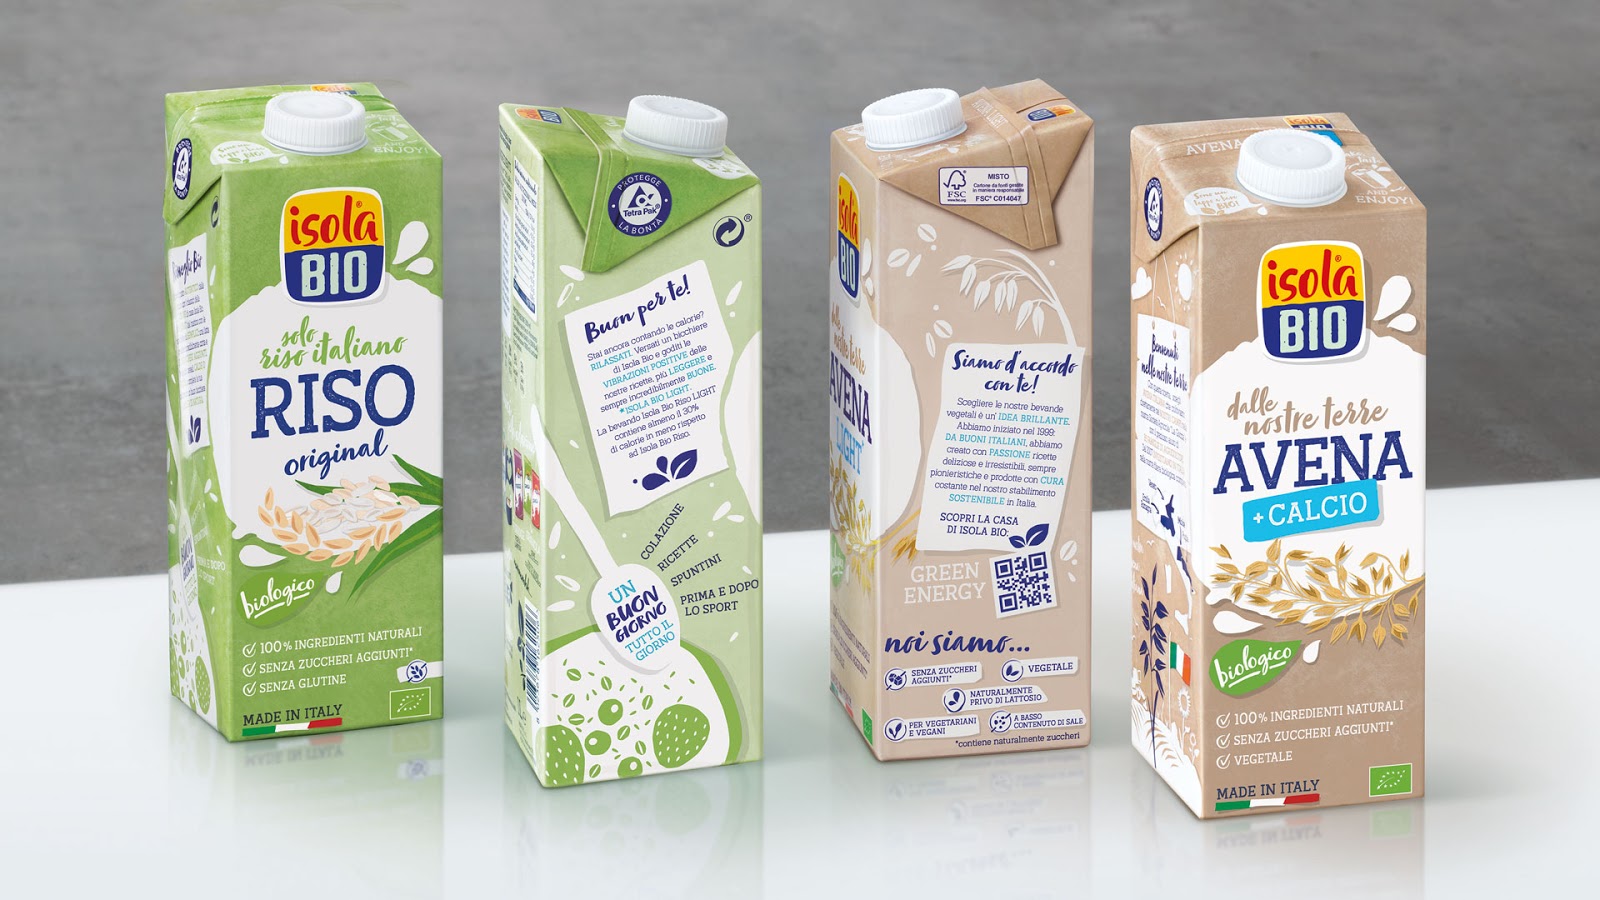 Isola Bio谷物饮料包装设计